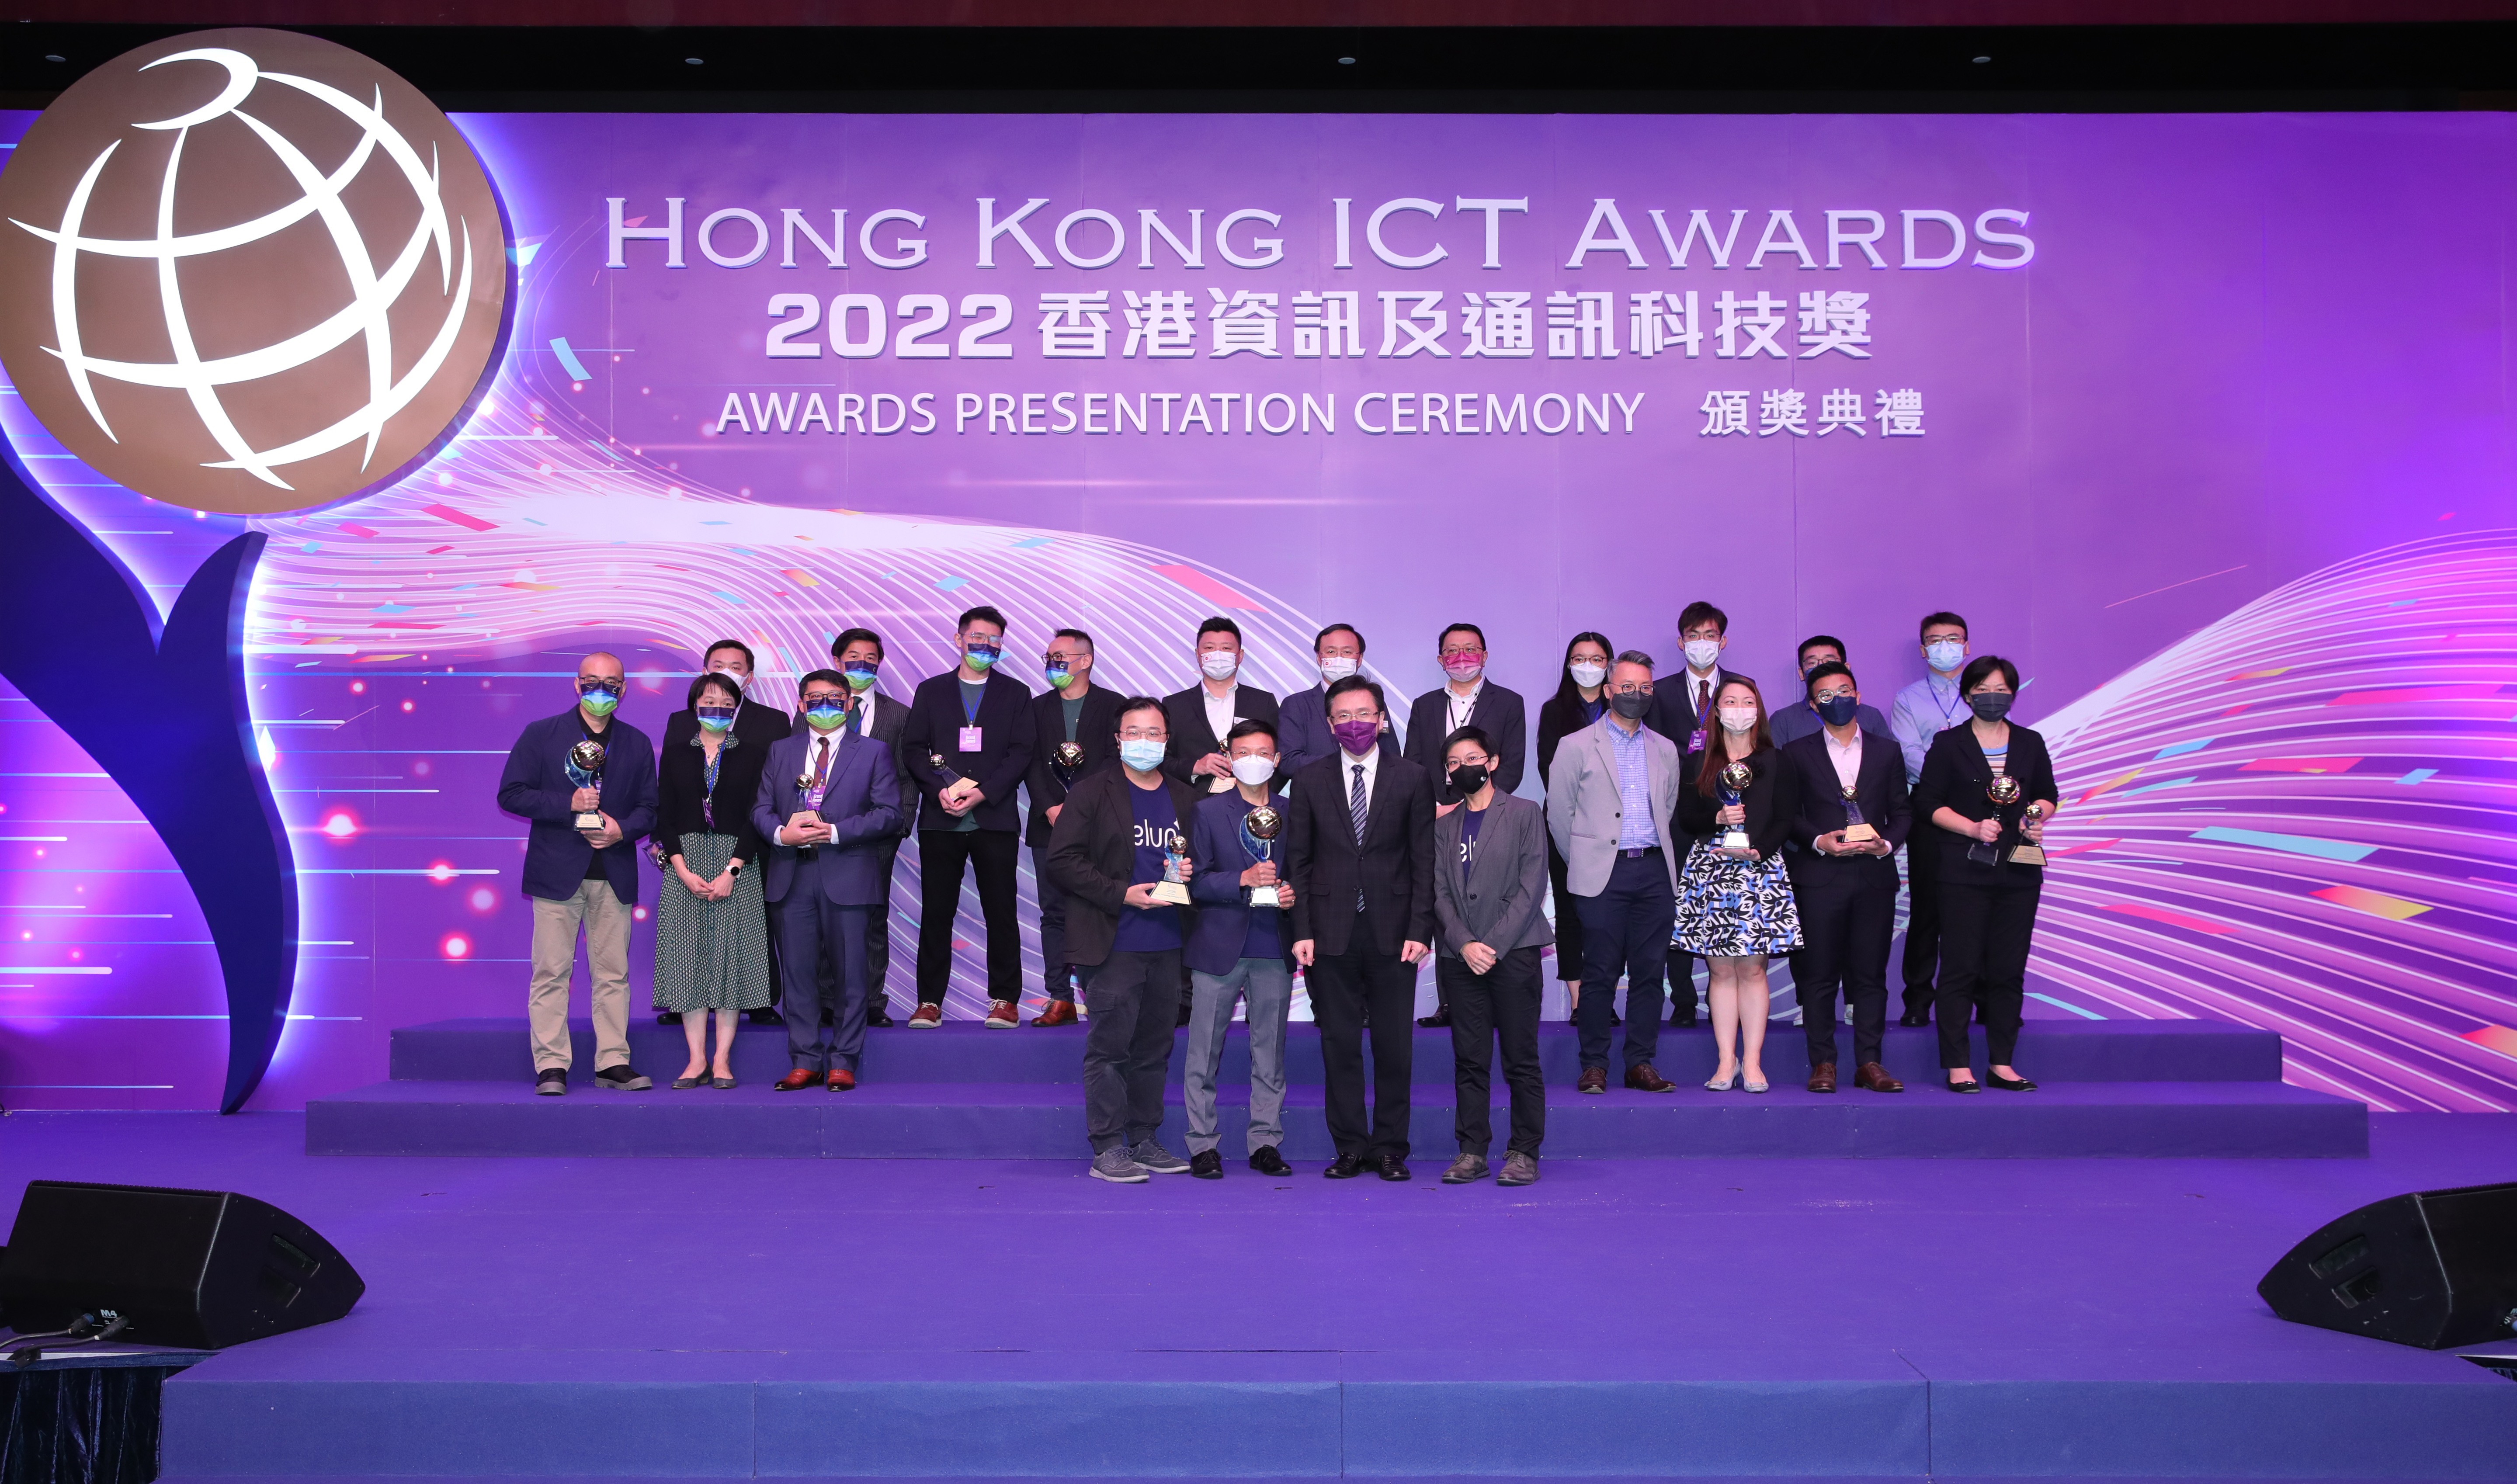 Hong Kong ICT Awards 2022 Smart People Grand Award Winner